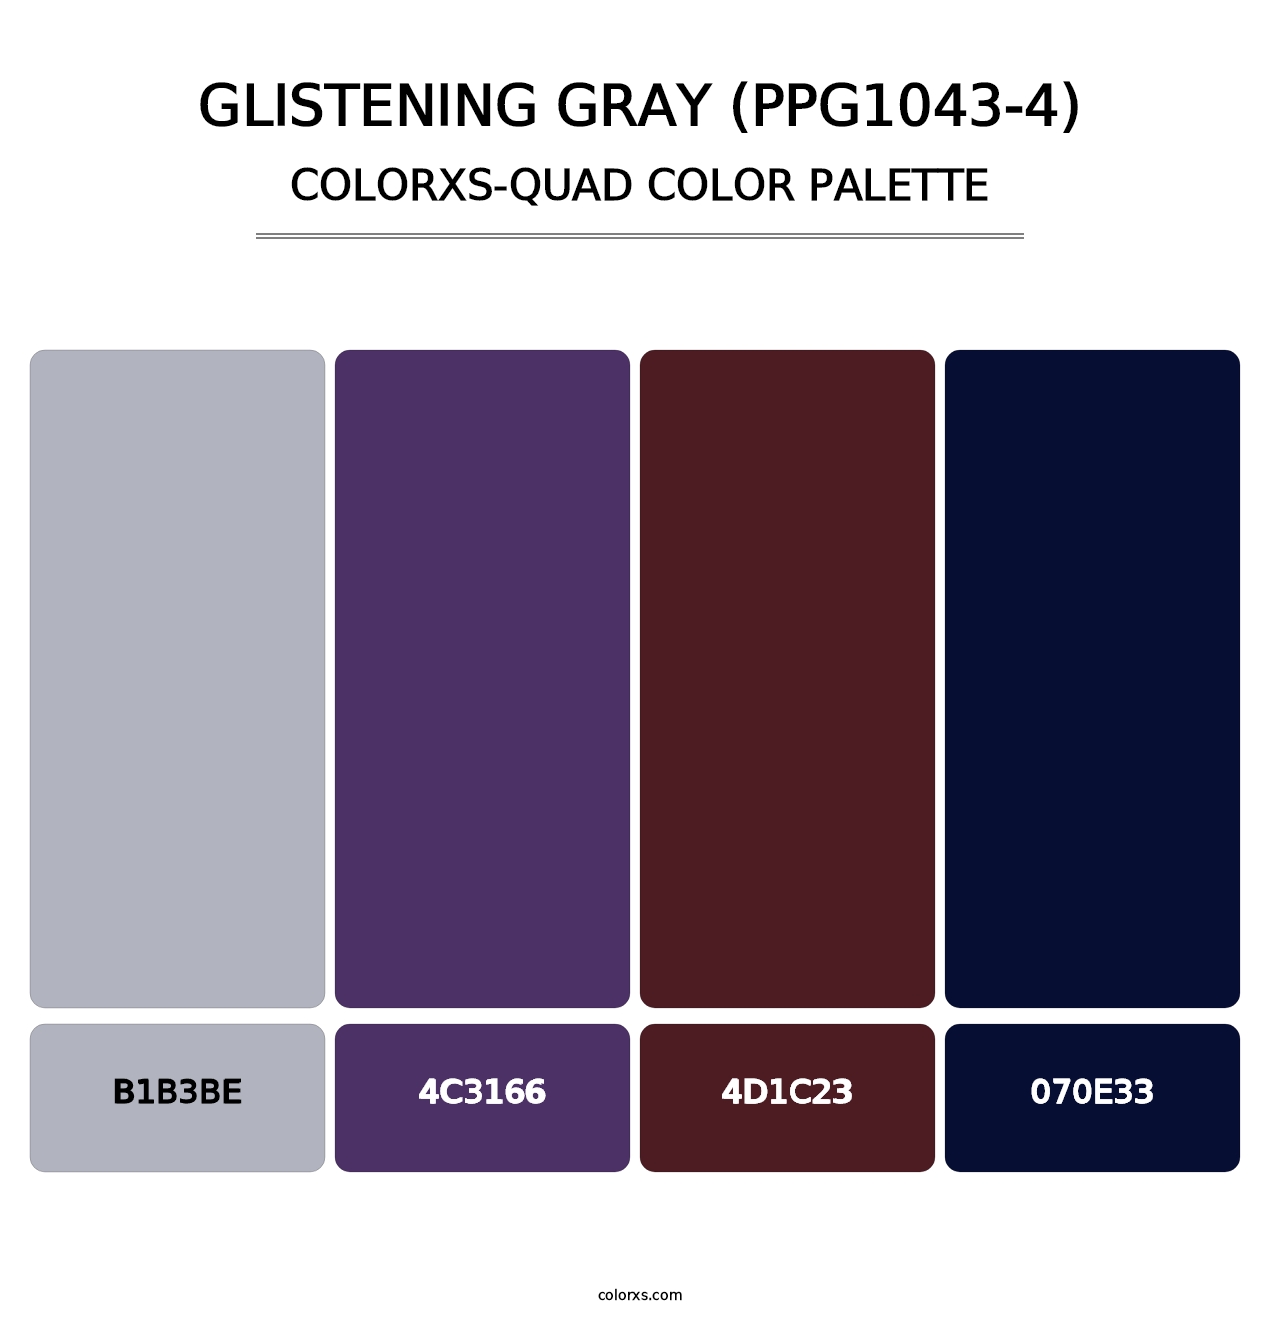 Glistening Gray (PPG1043-4) - Colorxs Quad Palette